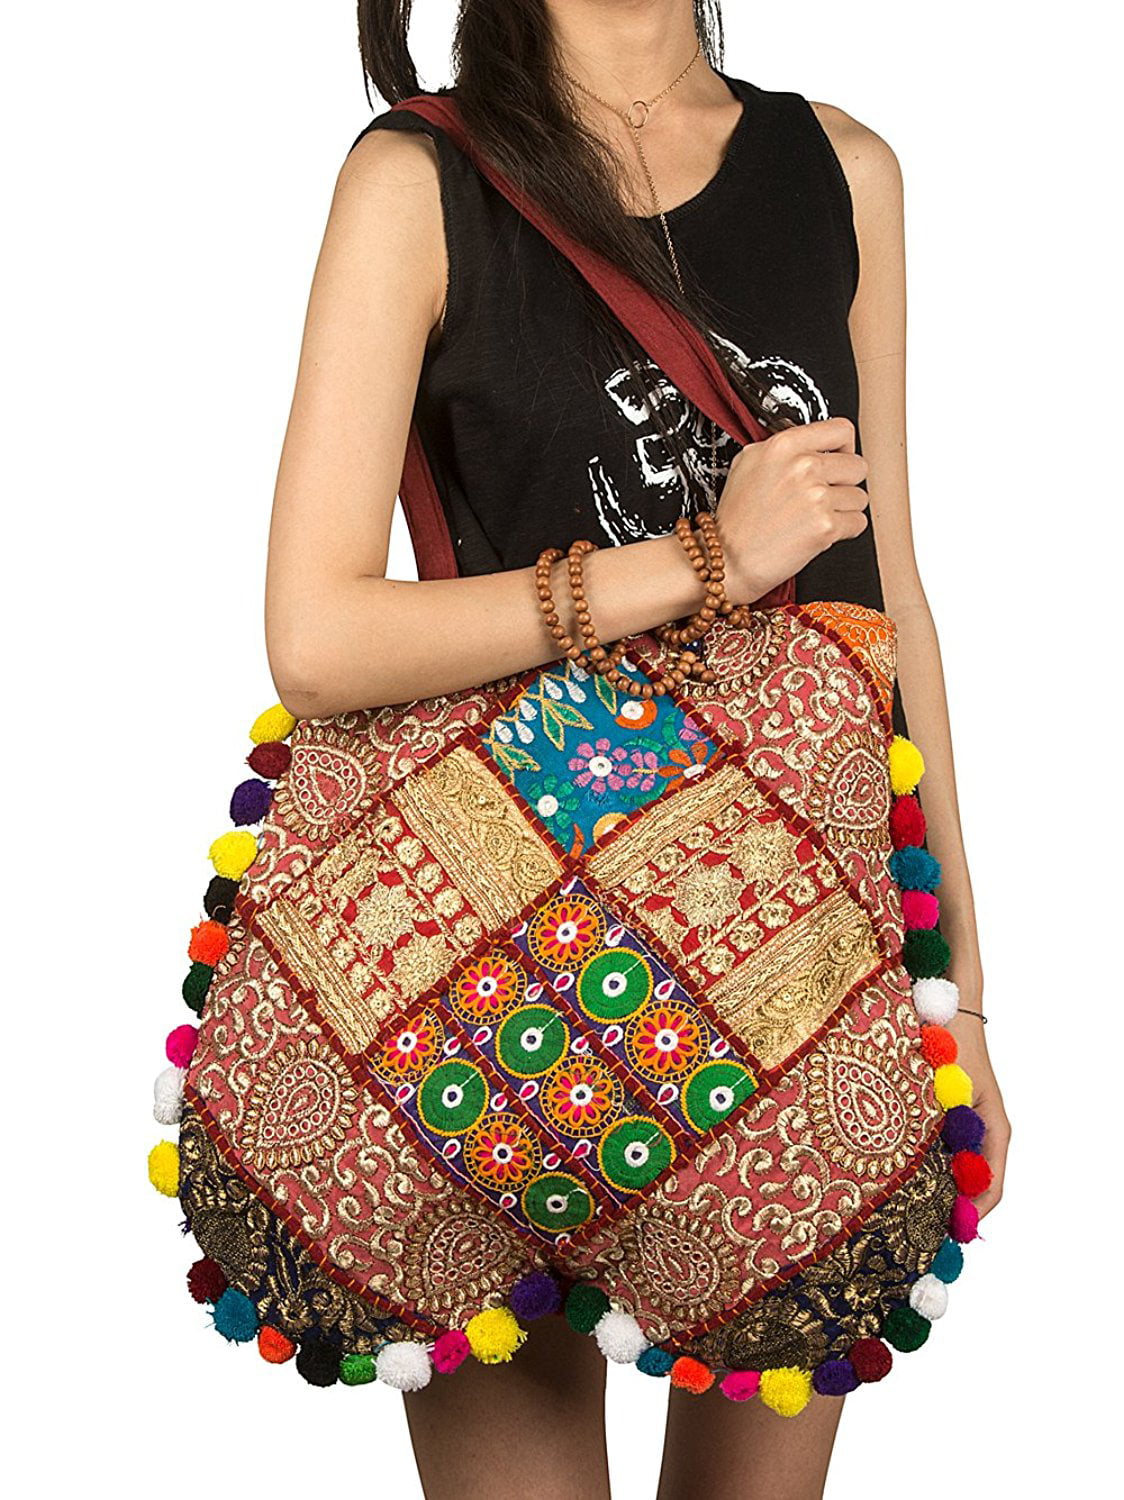 Charm #15 - Agate, Boho Glam for your Designer Handbag – Vintage Boho Bags